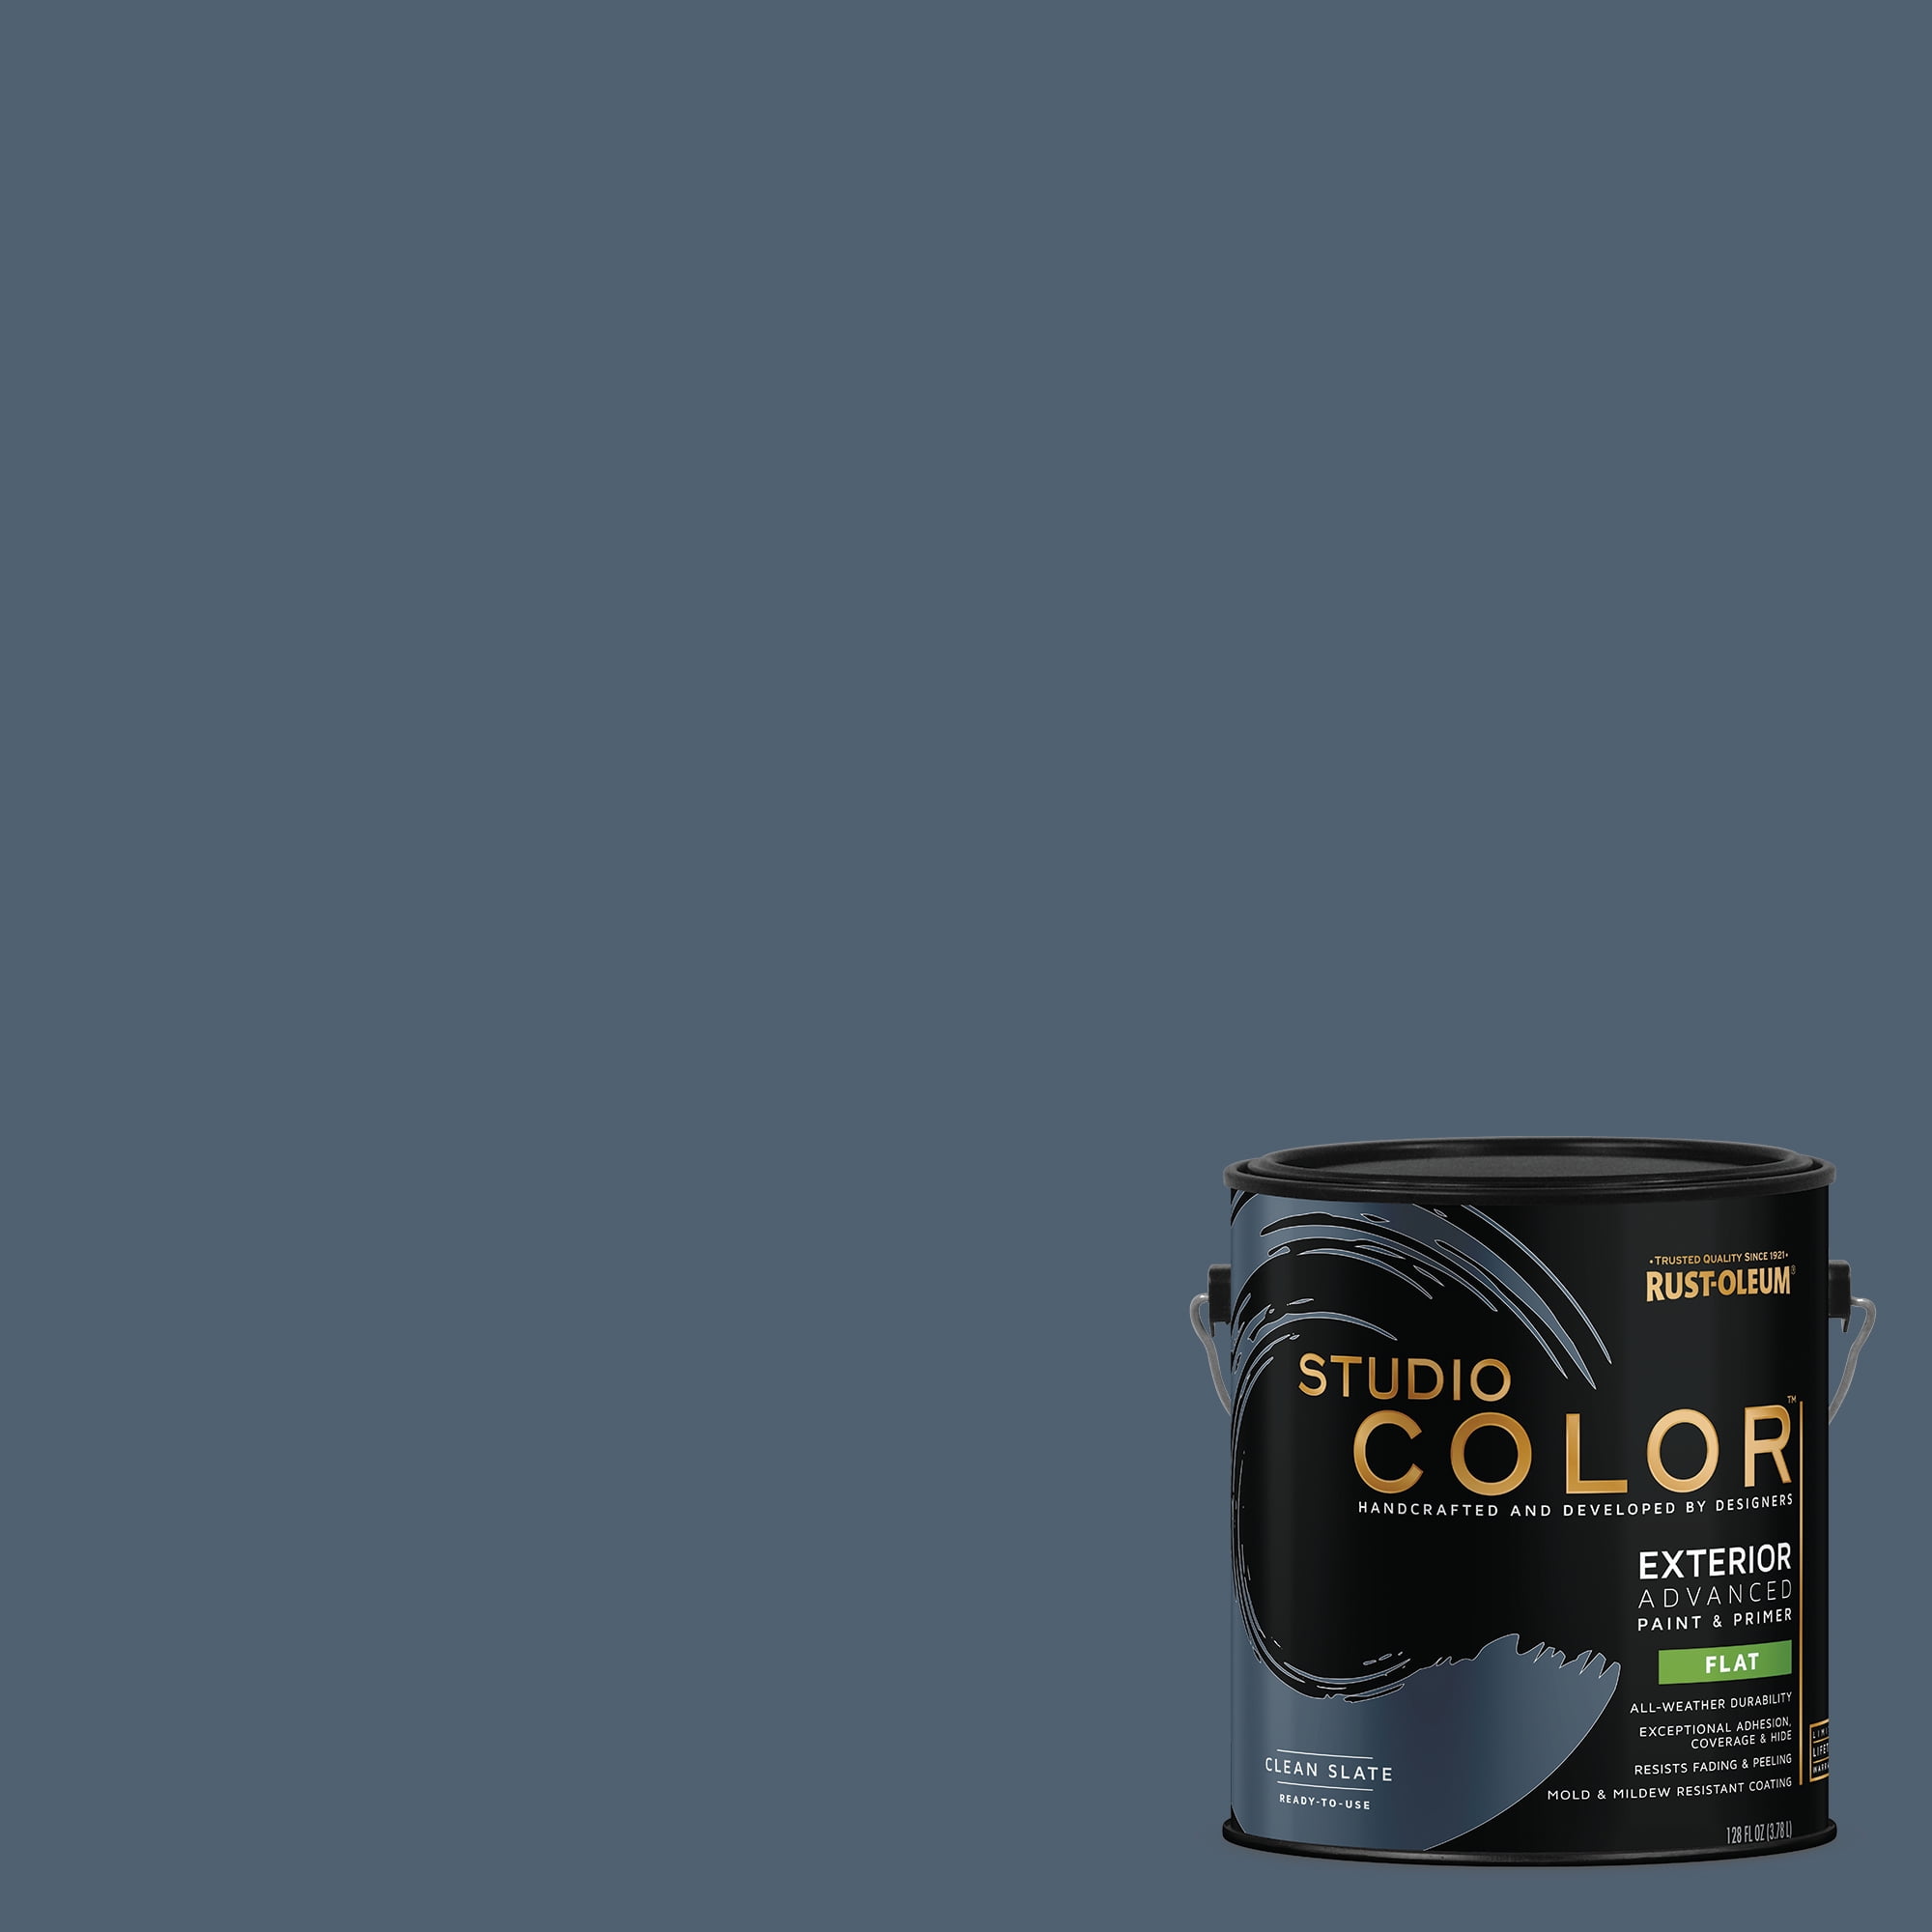 Magnetic Receptive Wall Paint/Dark Black Primer - One Quart